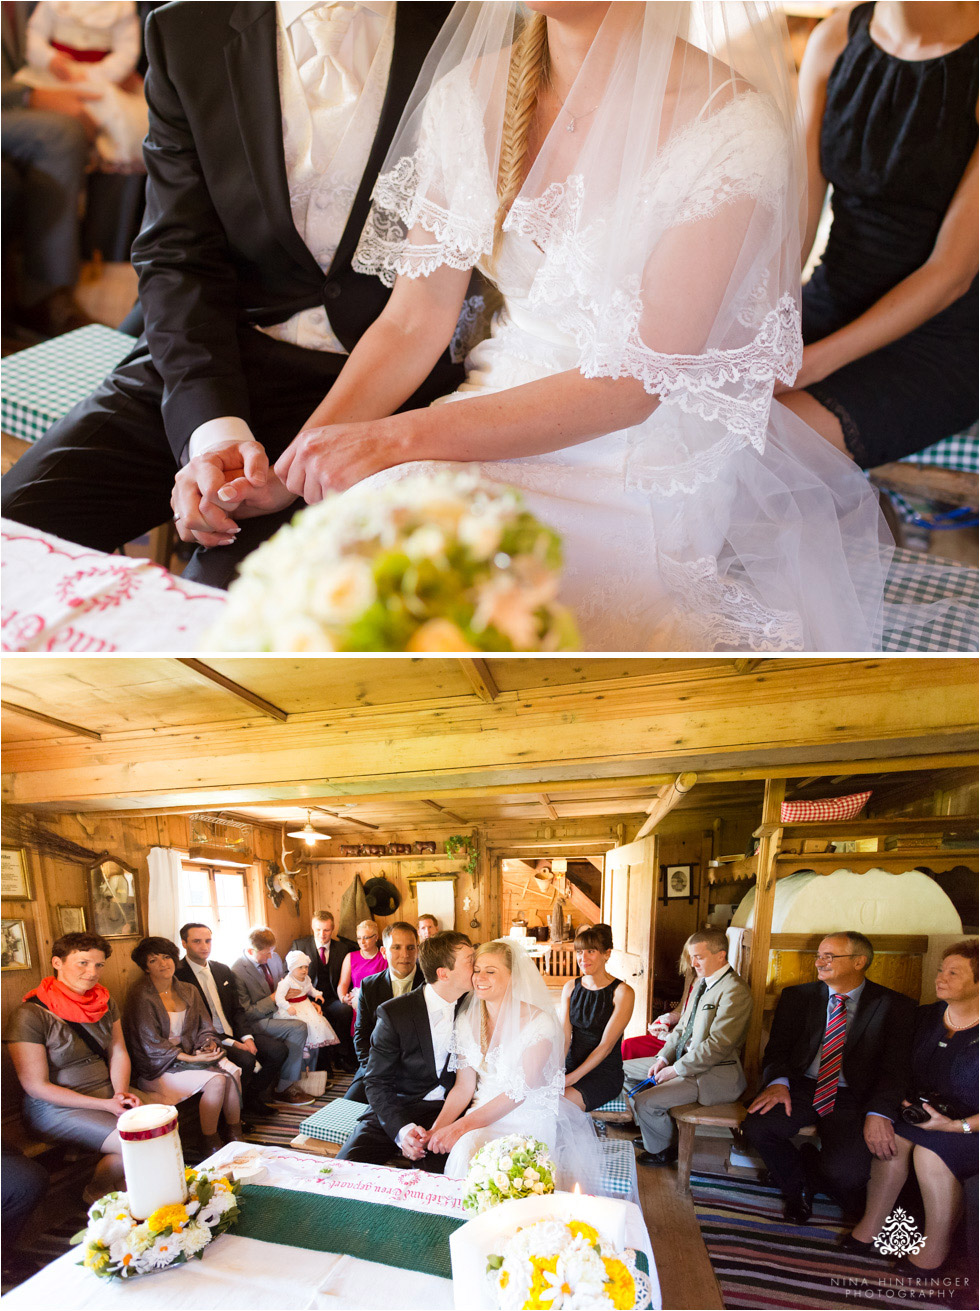 Edelweiss Wedding with Saskia & Martin in the Tyrolean Alps | Zillertal, Tyrol - Blog of Nina Hintringer Photography - Wedding Photography, Wedding Reportage and Destination Weddings